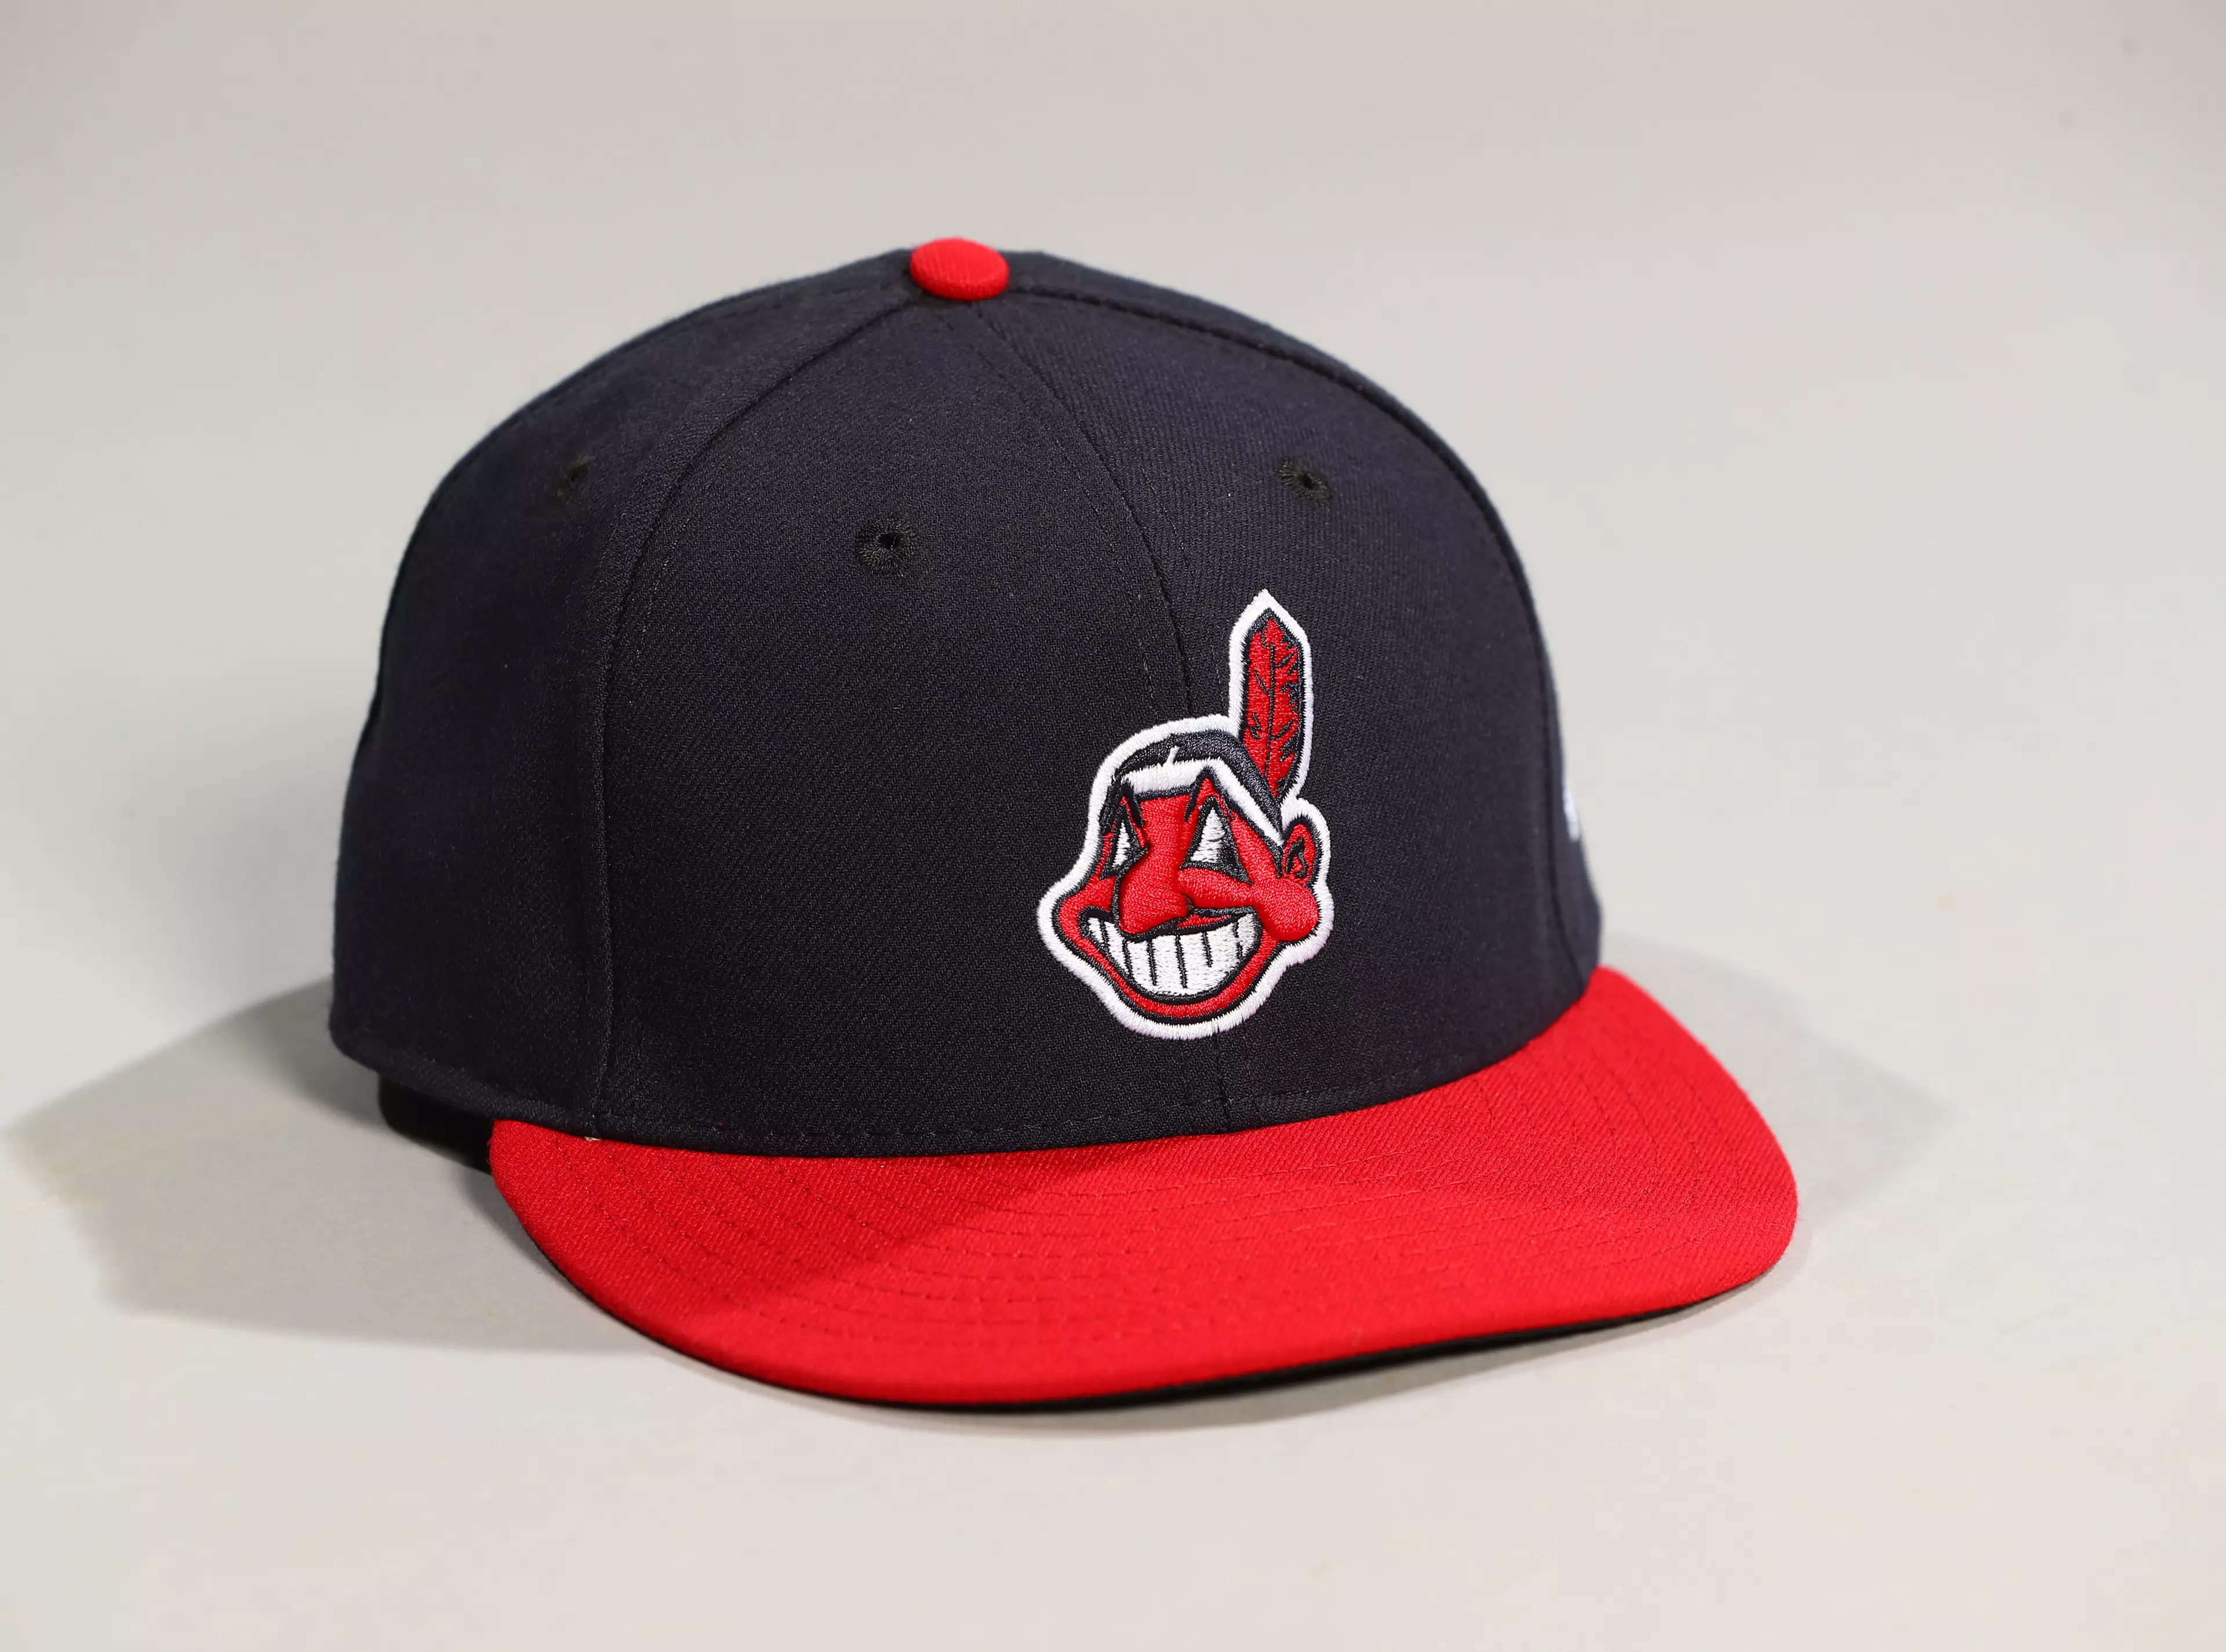 The Chief Wahoo logo on an Indians baseball cap.